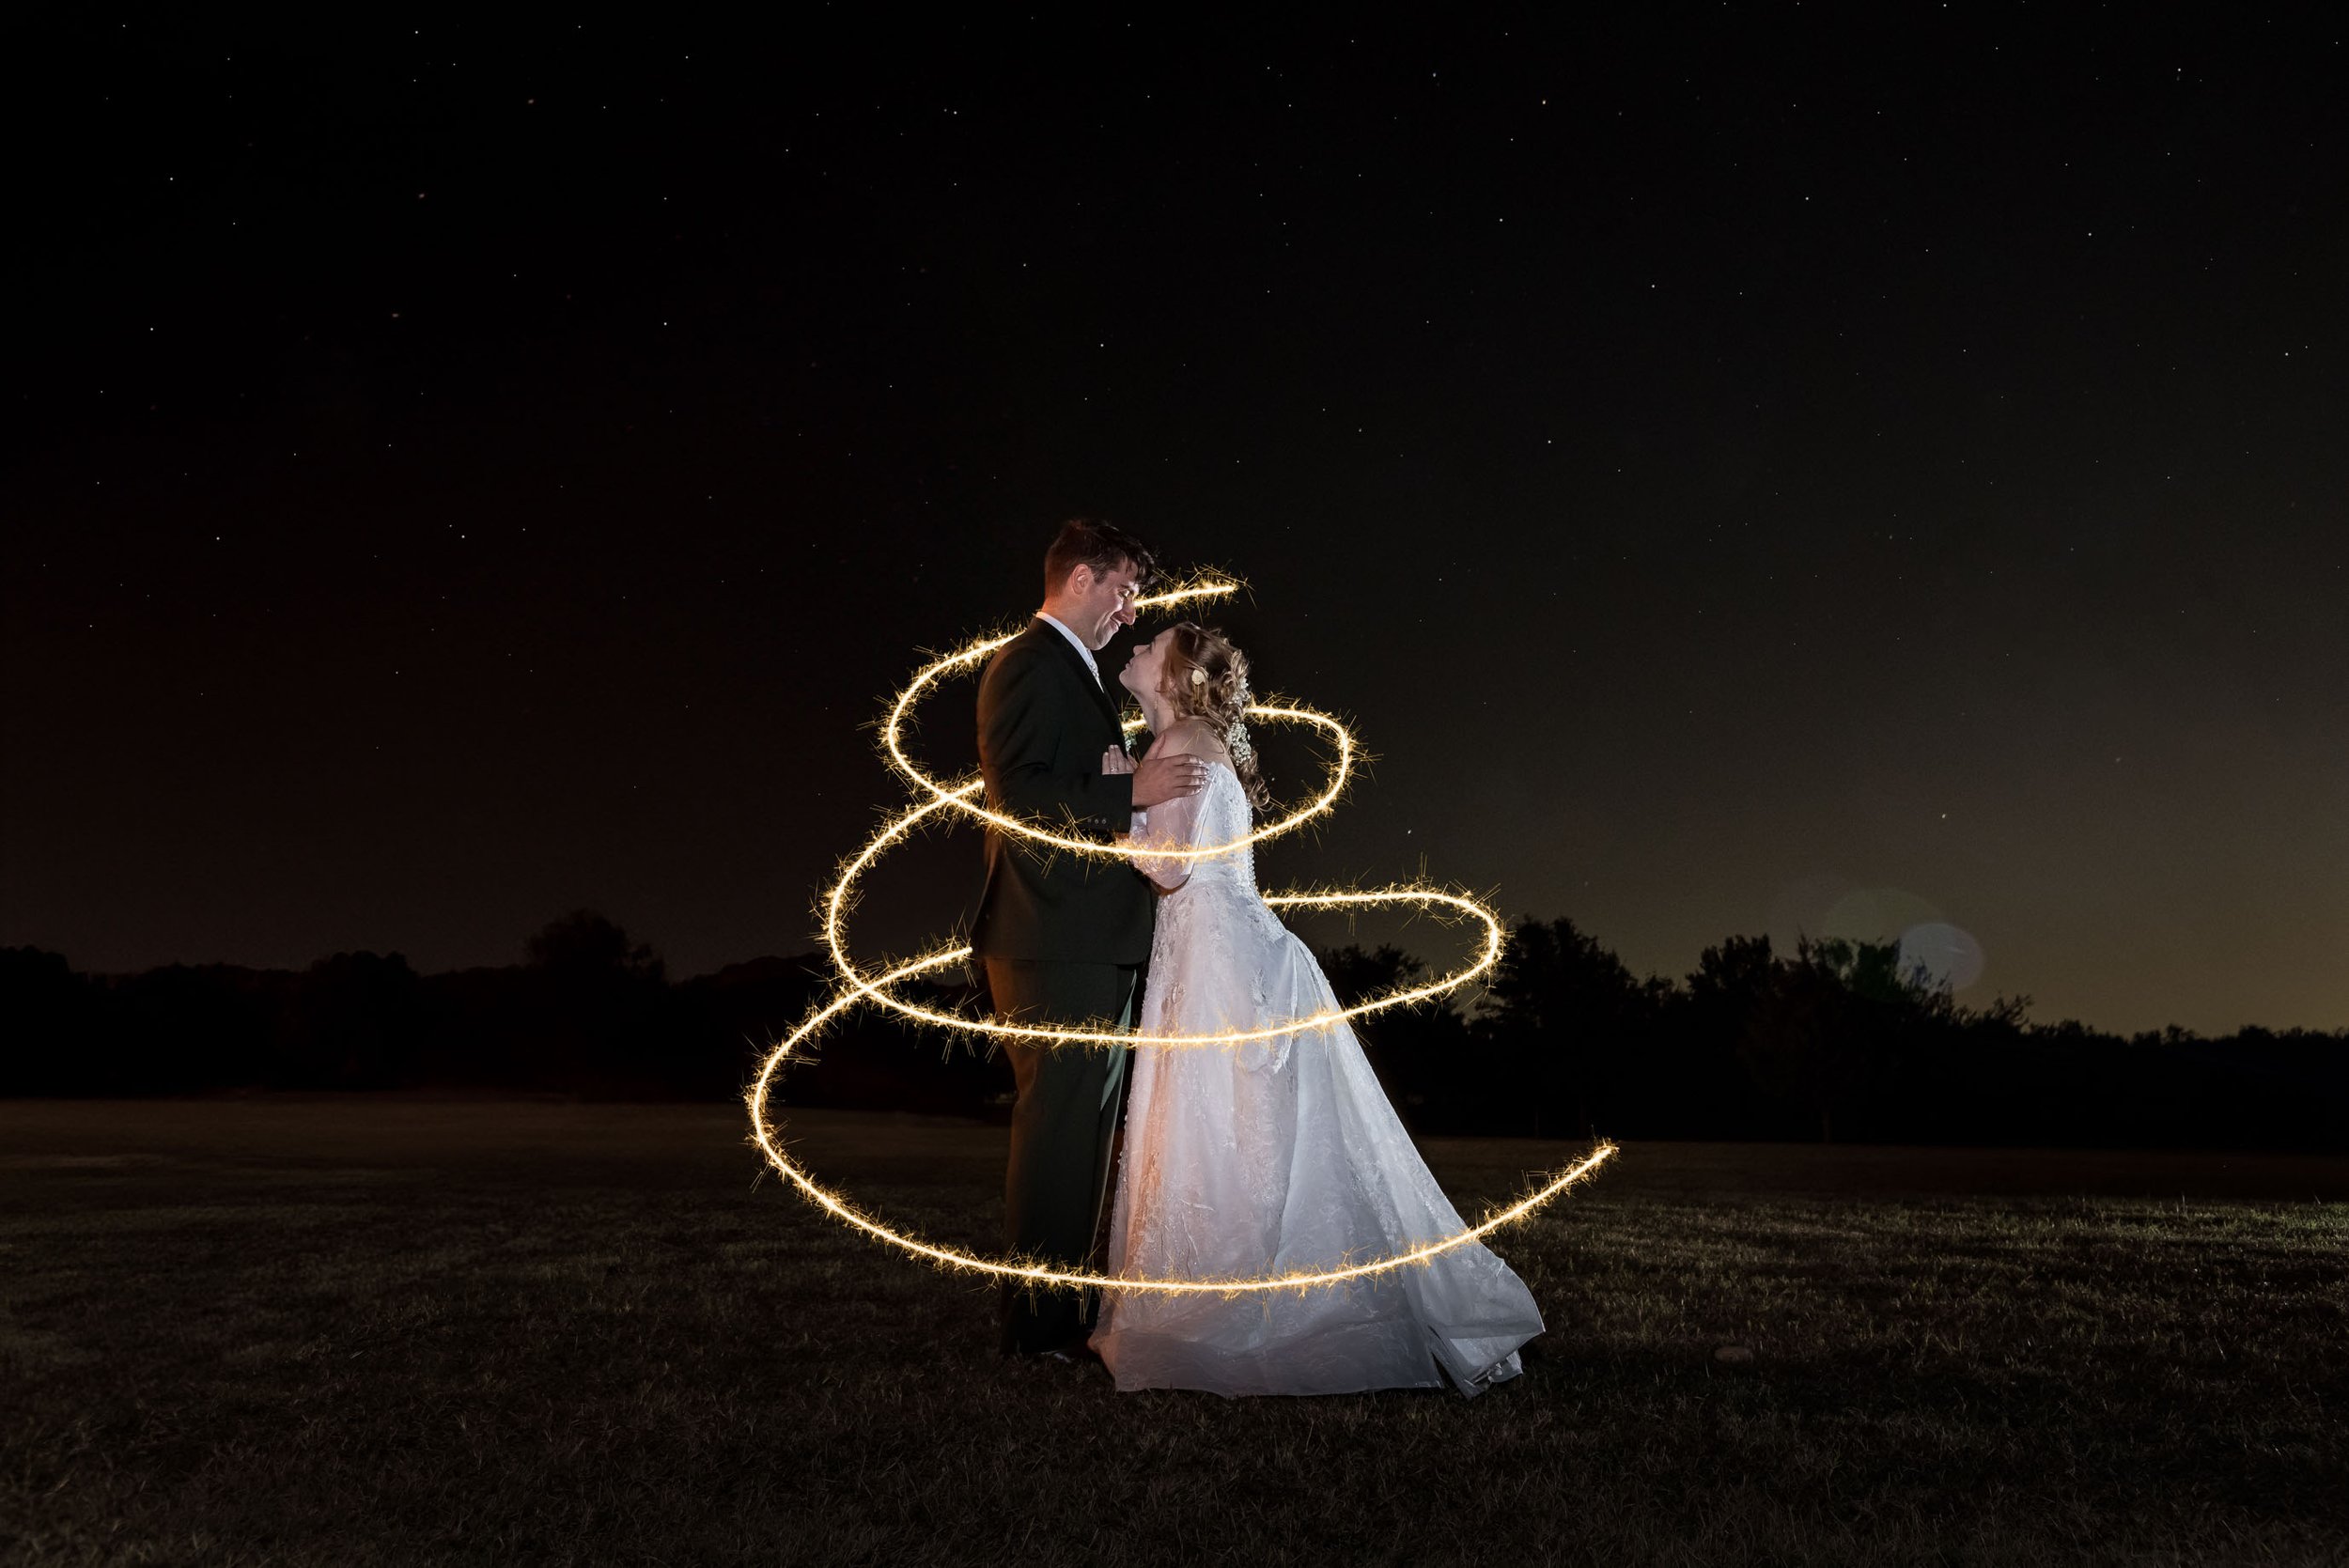 wedding-photographer-photography-okc-edmond-oklahoma-city-beautiful-bride-groom-night-portrait-sparkler-circle-stars-chadandbriephotography.jpg